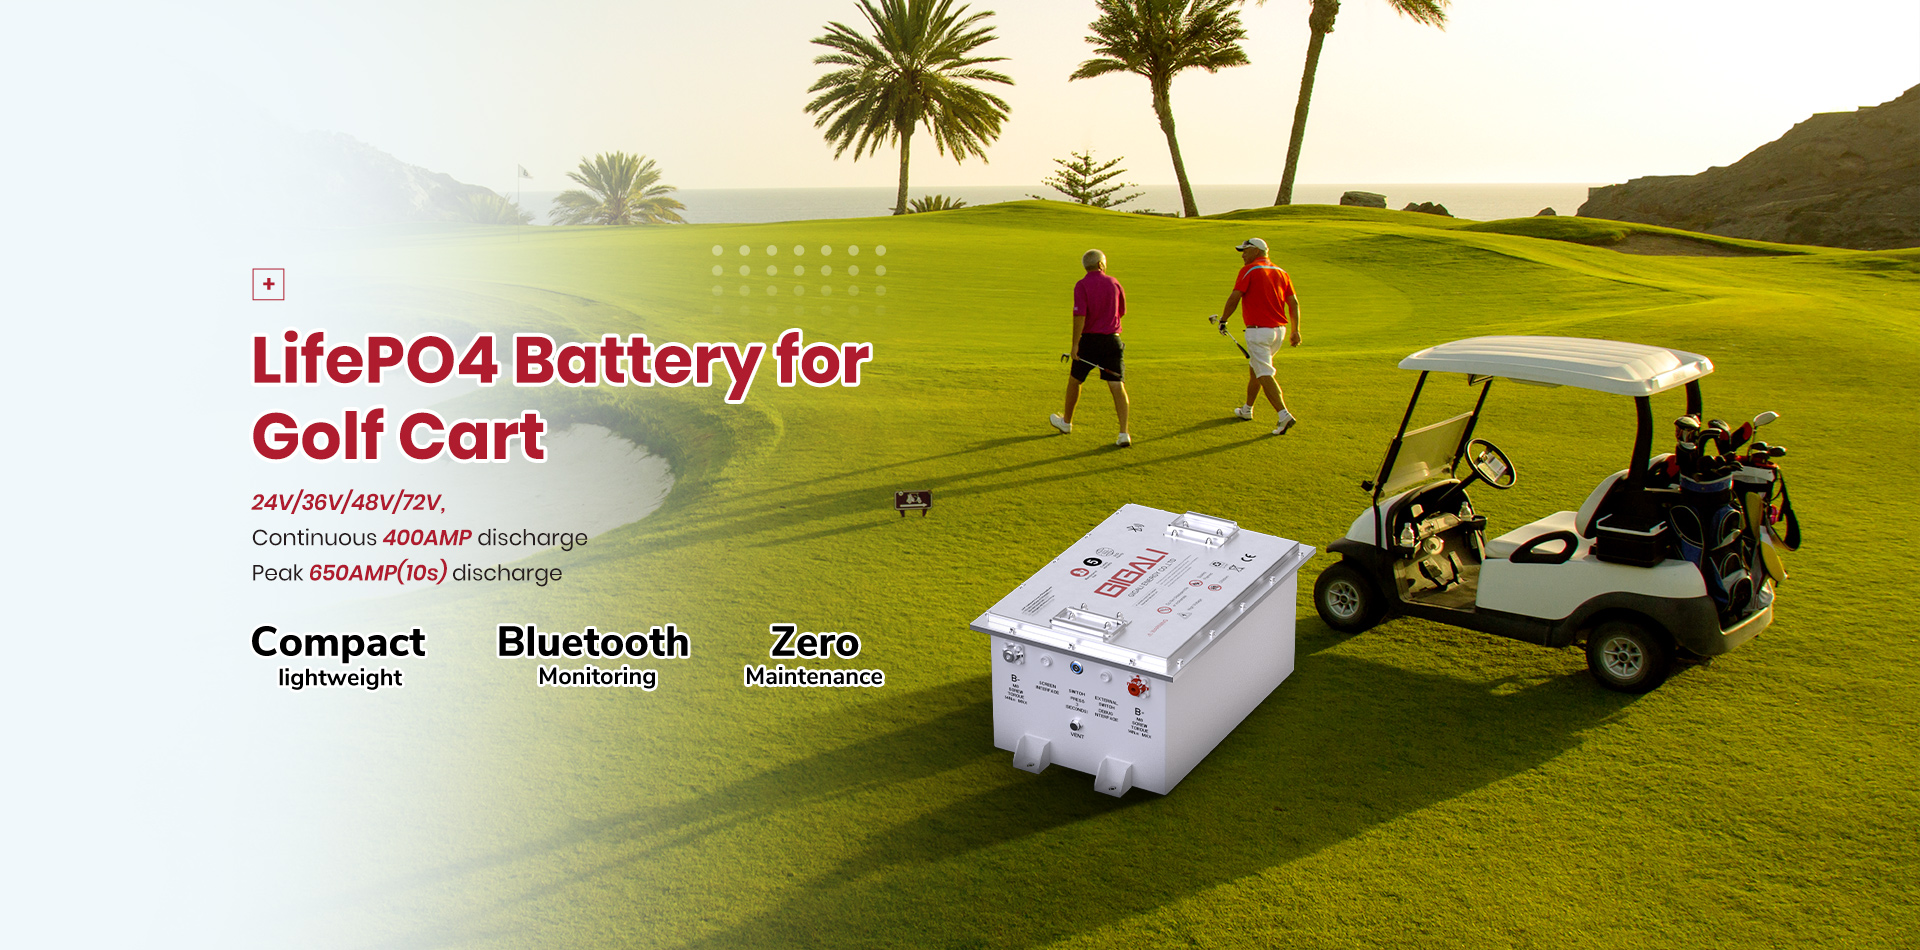 Battery for golf cart